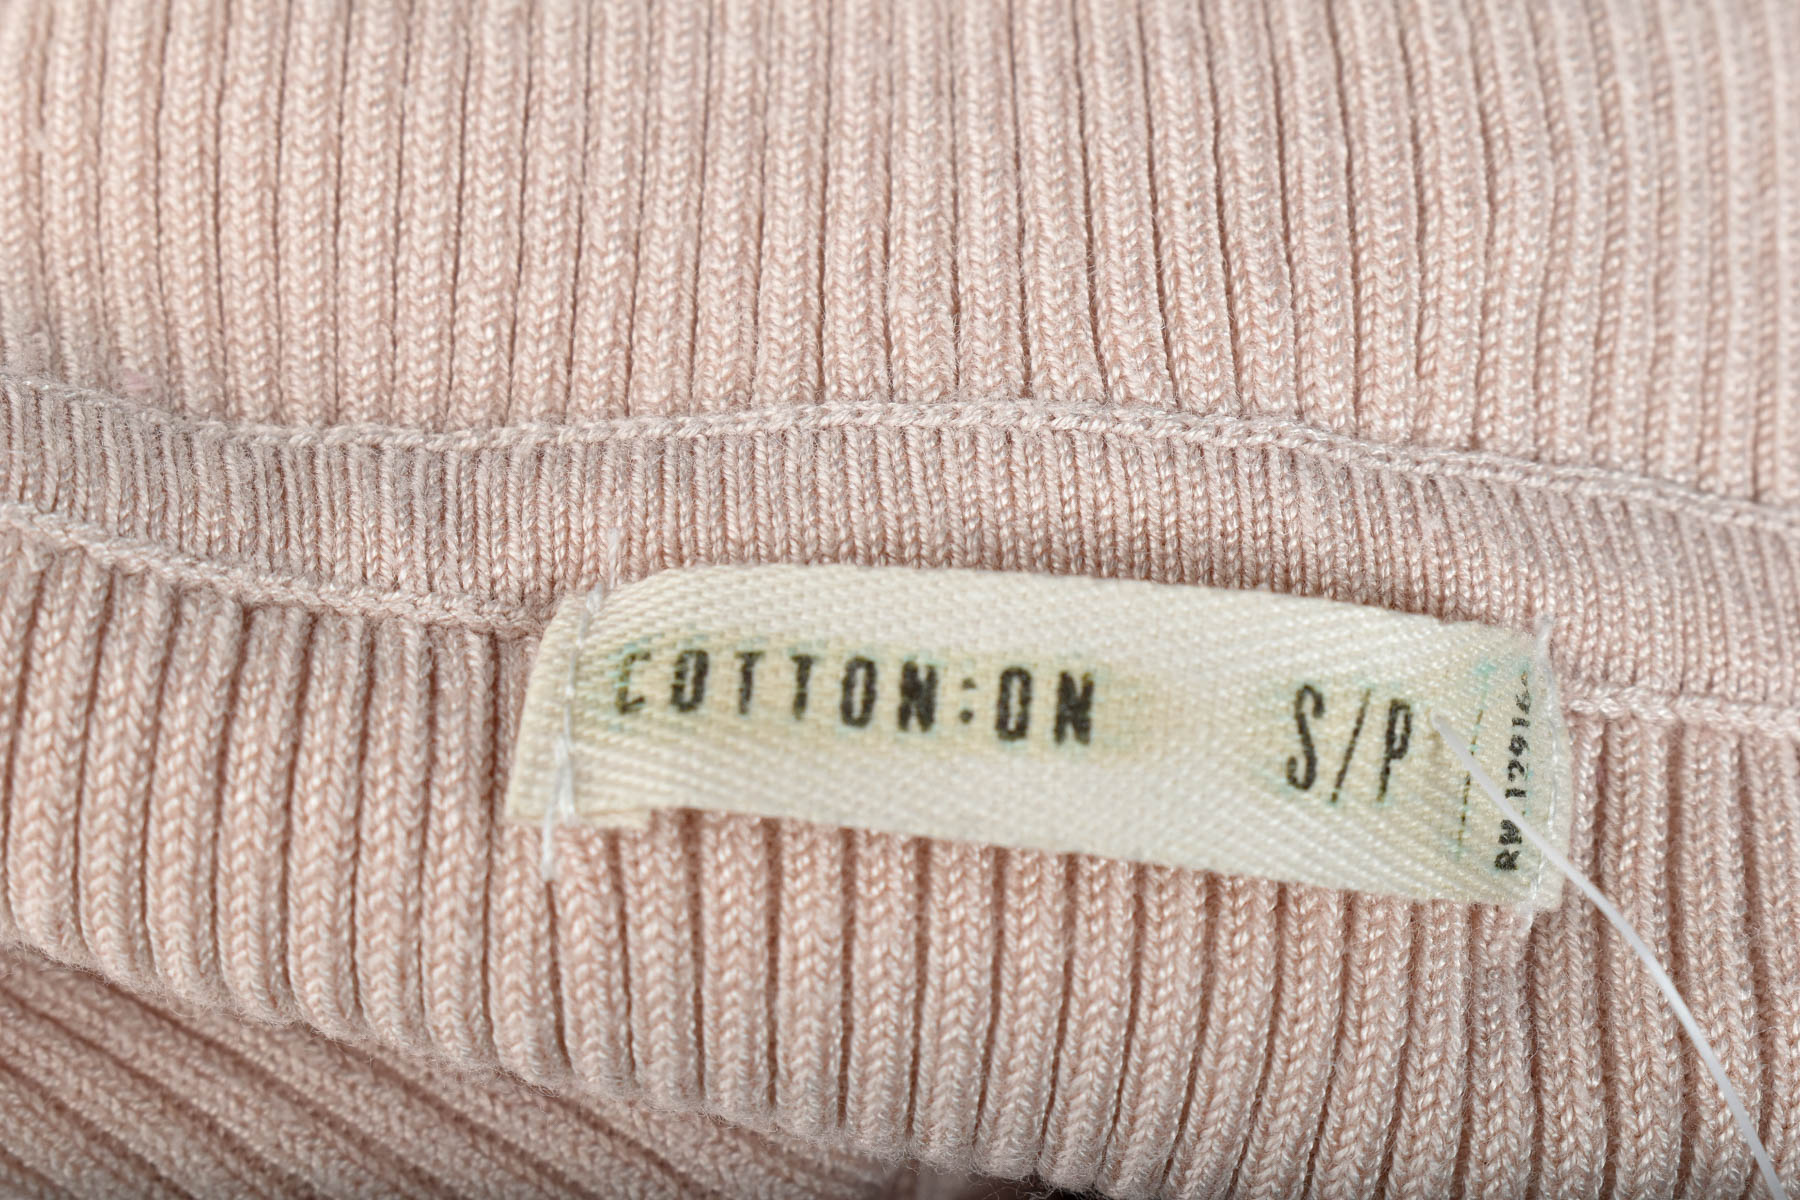 Дамски пуловер - COTTON:ON - 2